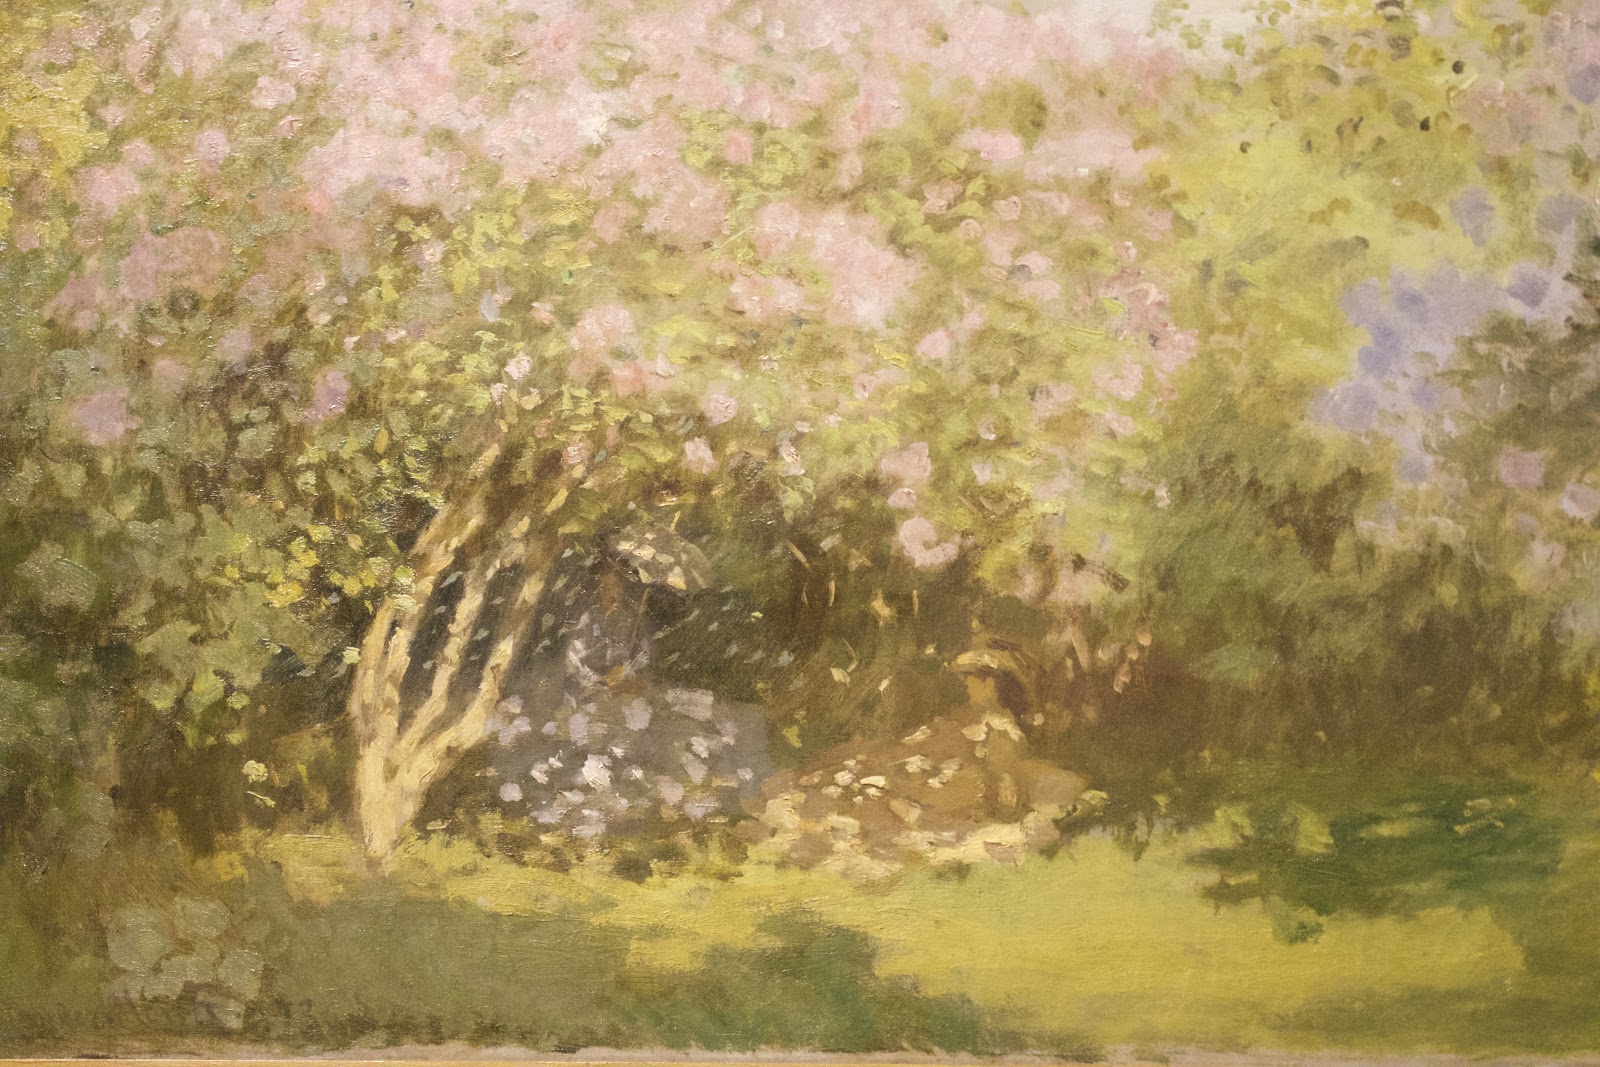 Claude+Monet-1840-1926 (522).jpg